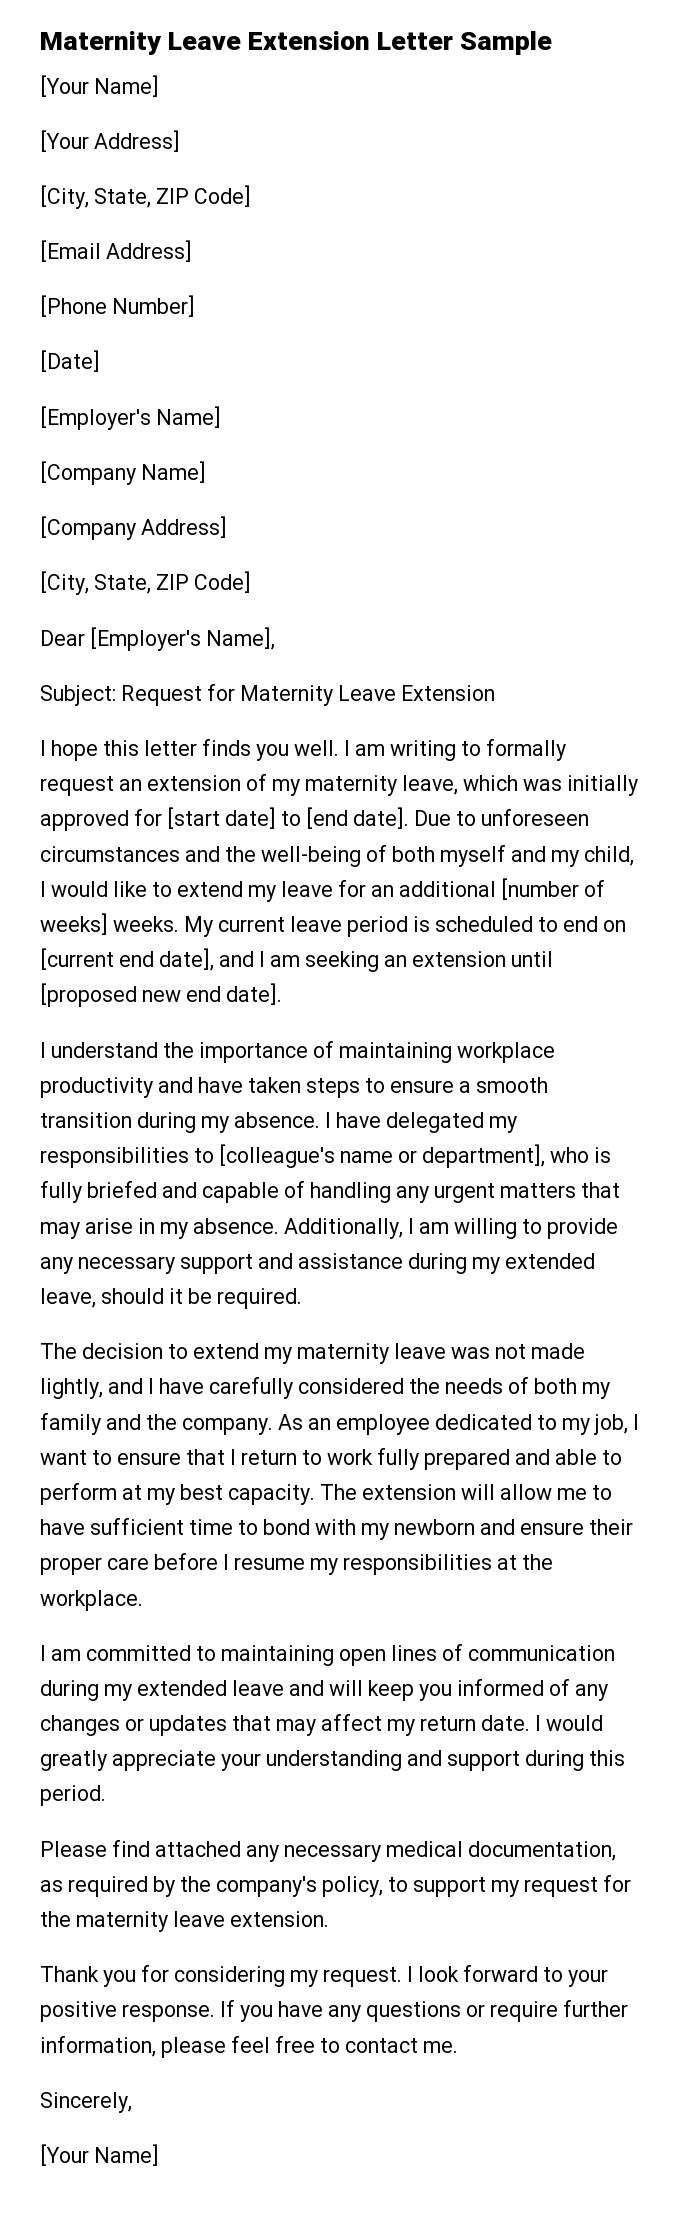 Maternity Leave Extension Letter Sample